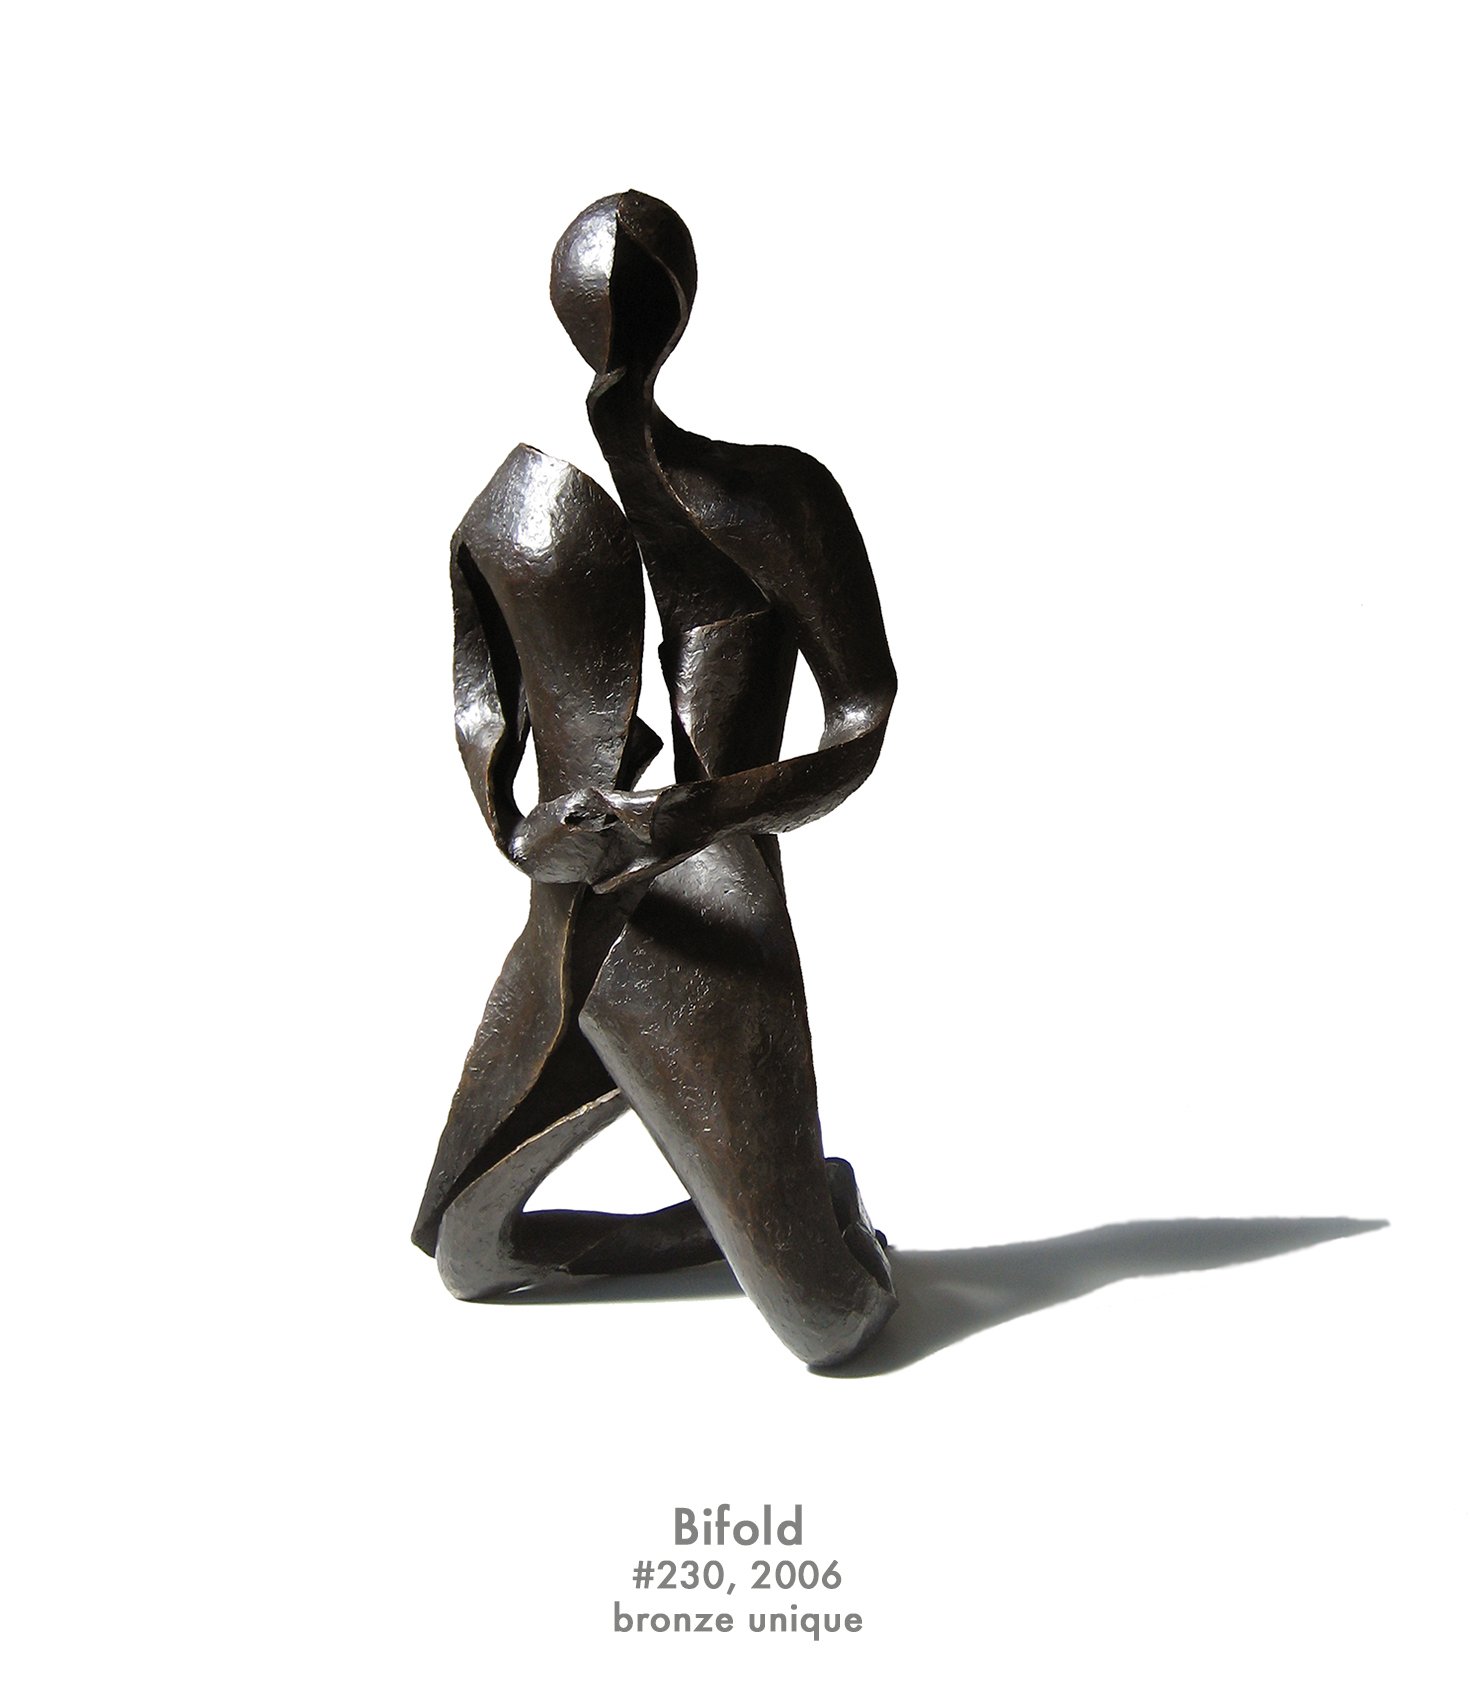 Bifold, 2006, bronze, #230